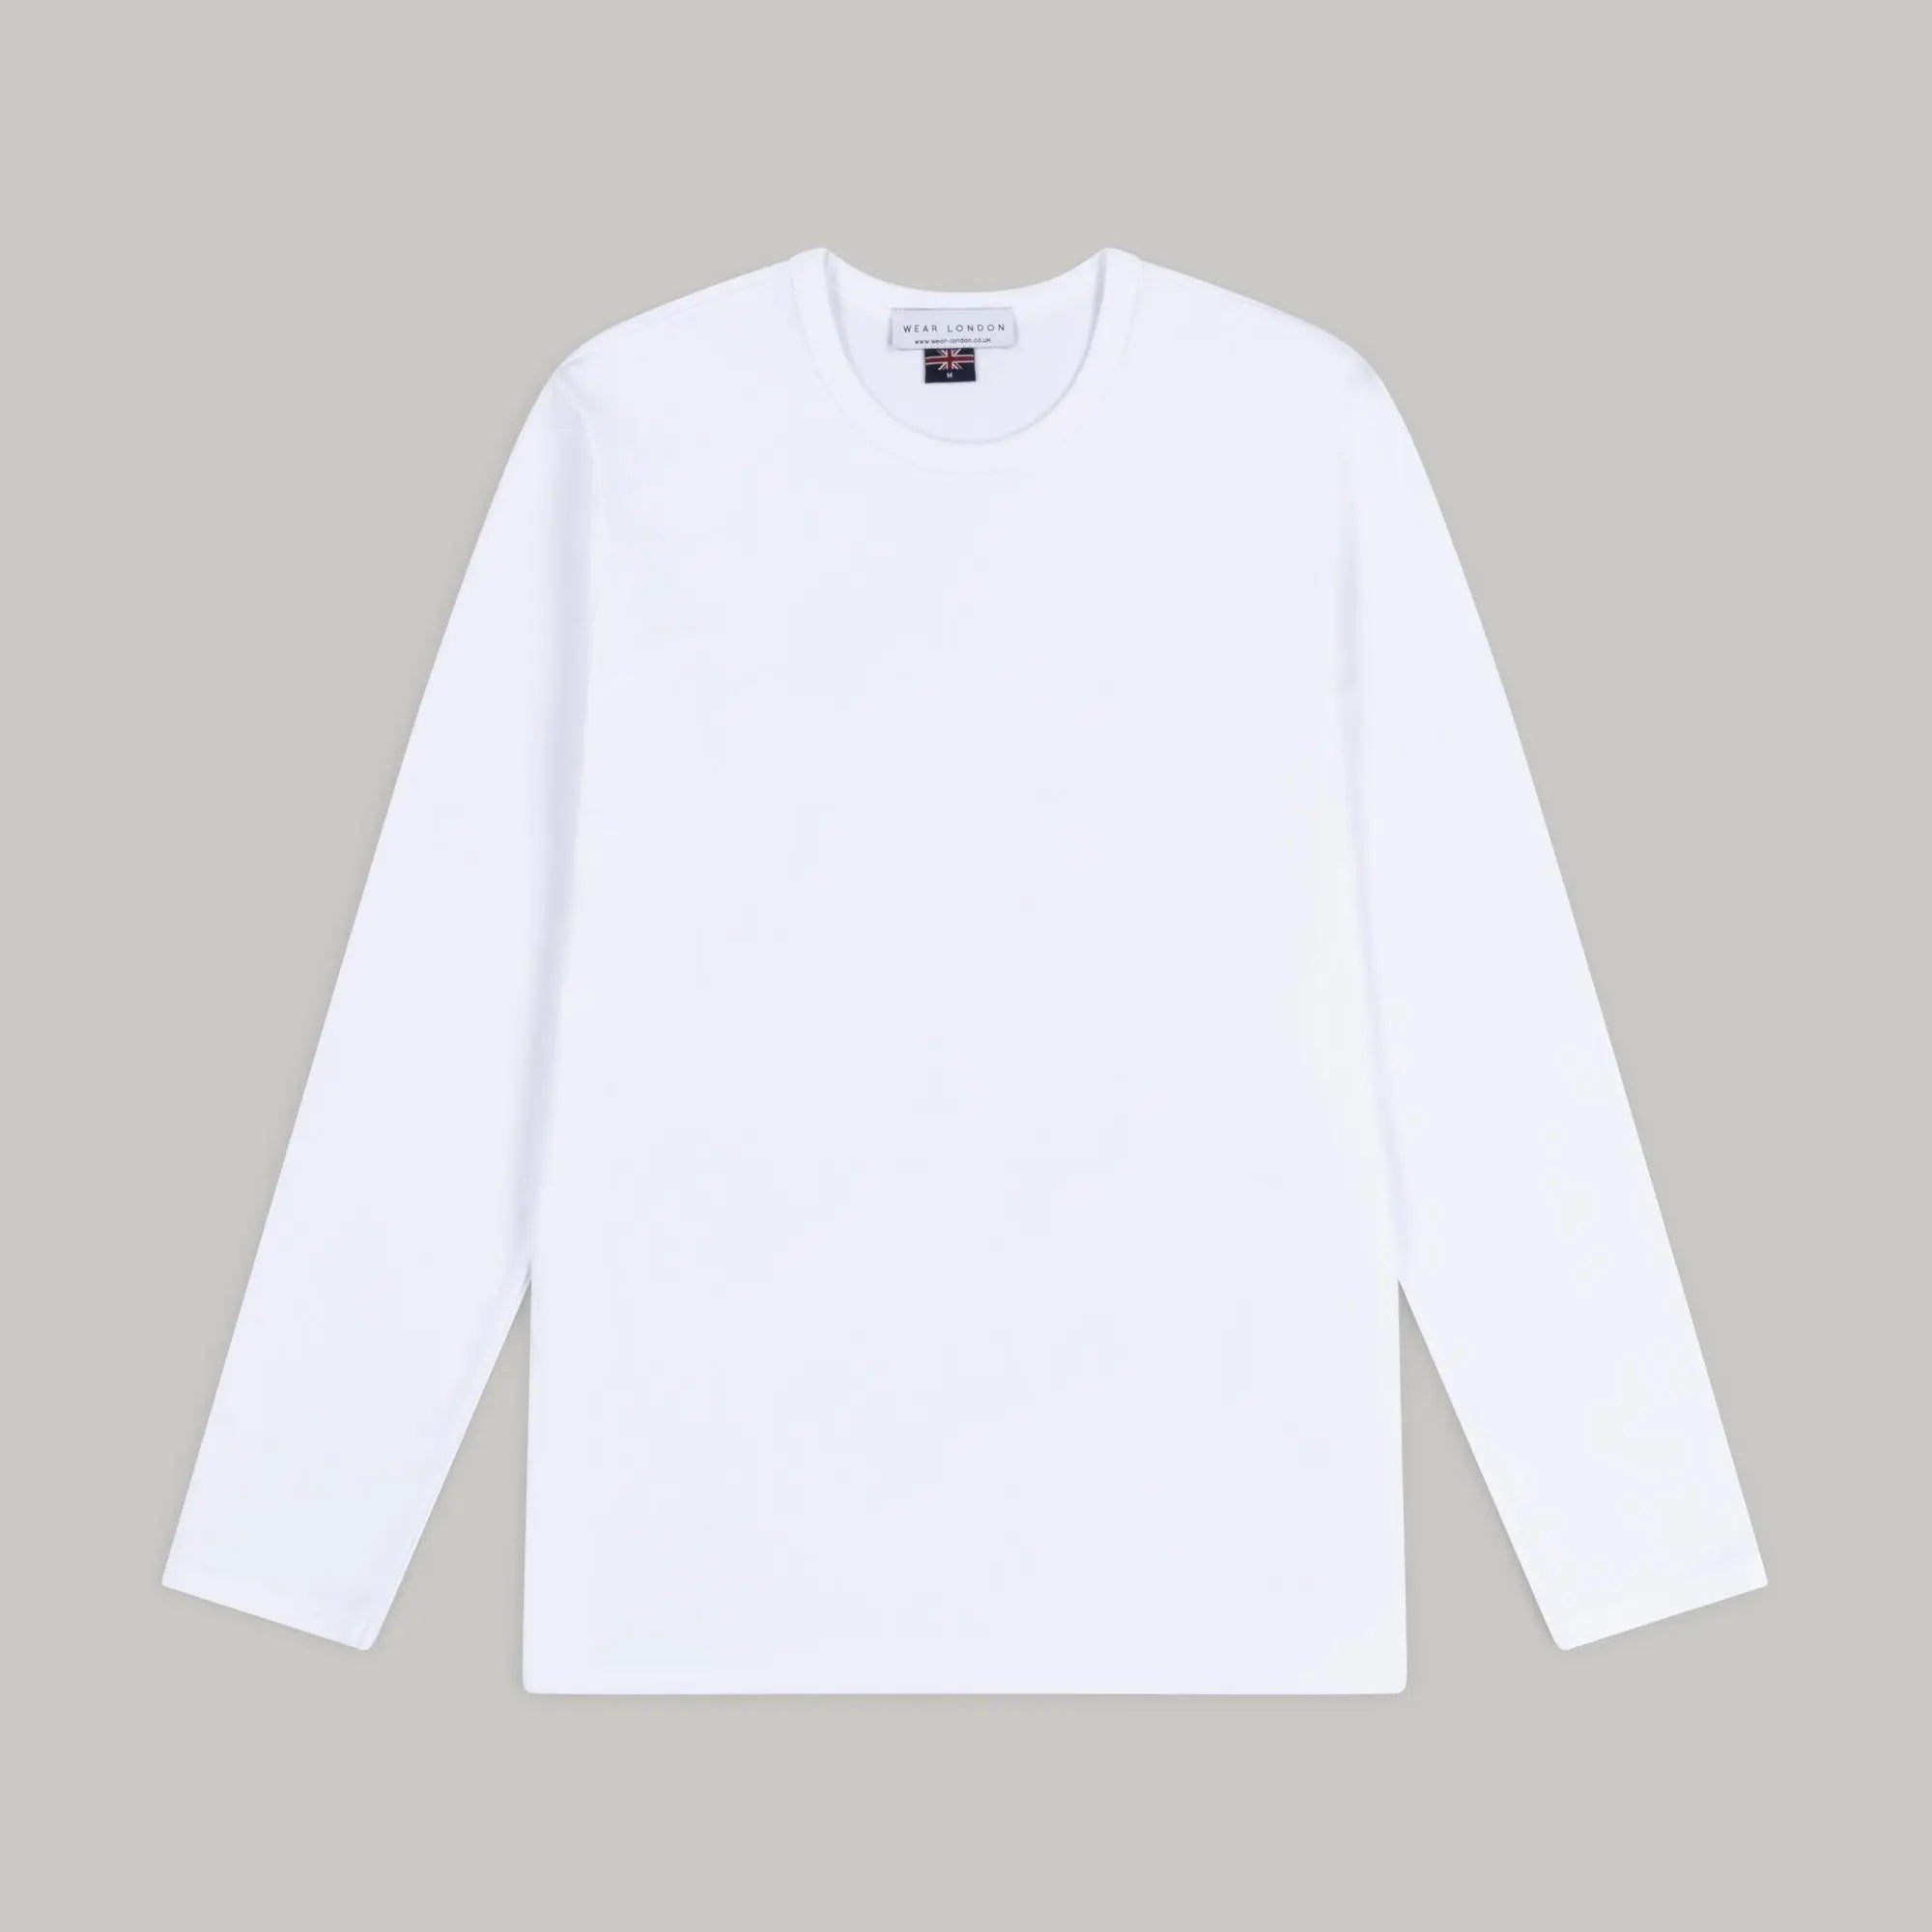 Bevis Long Sleeve t-shirt - White - Wear London